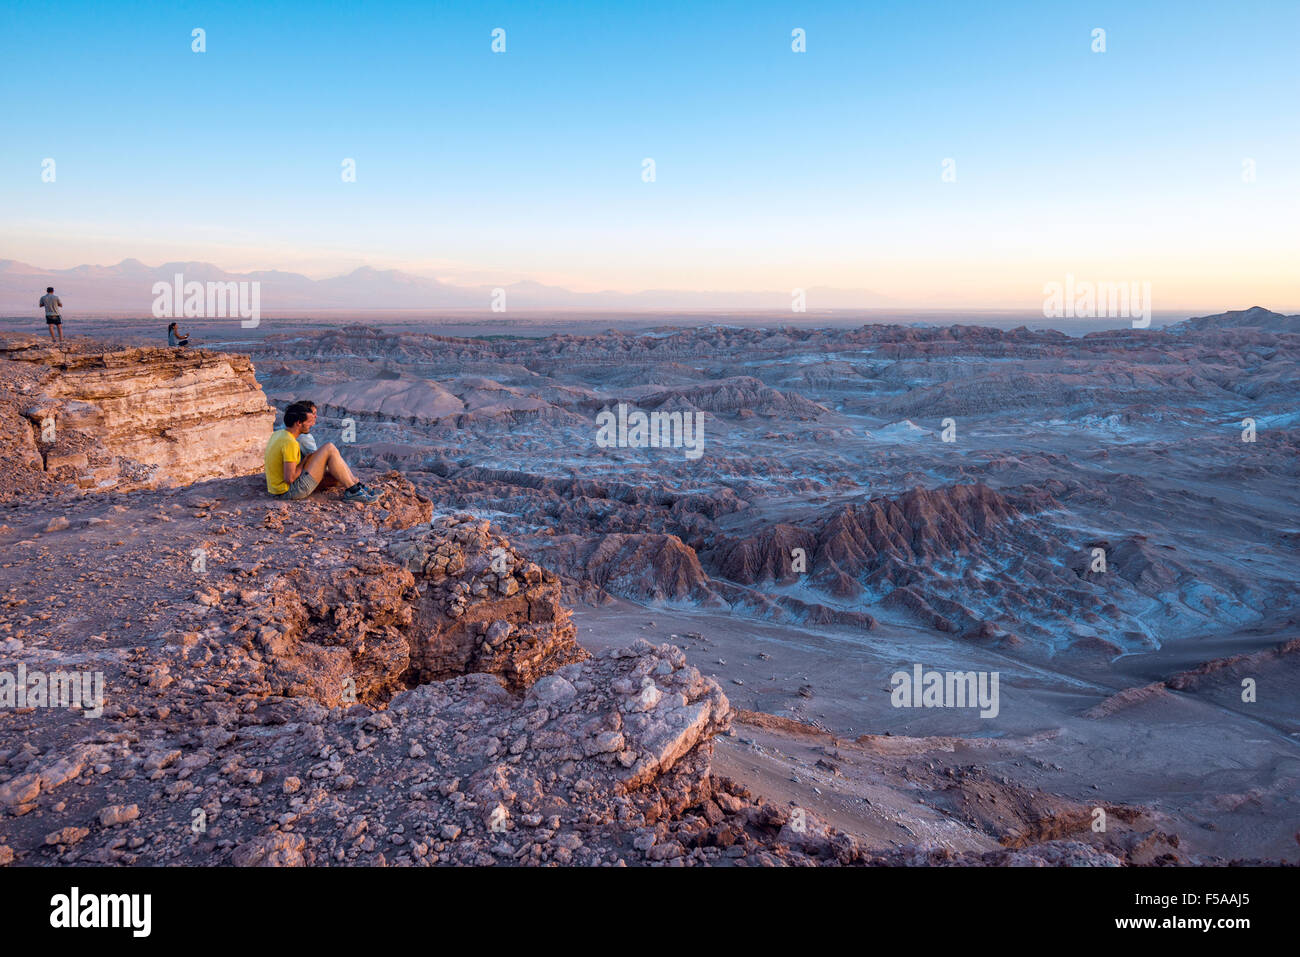 ATACAMA DESERT, CHILE - 7 DEC, 2014: Tourists make pictures in the Atacama desert, Chile. Atacama Desert proper occupies 105,000 Stock Photo